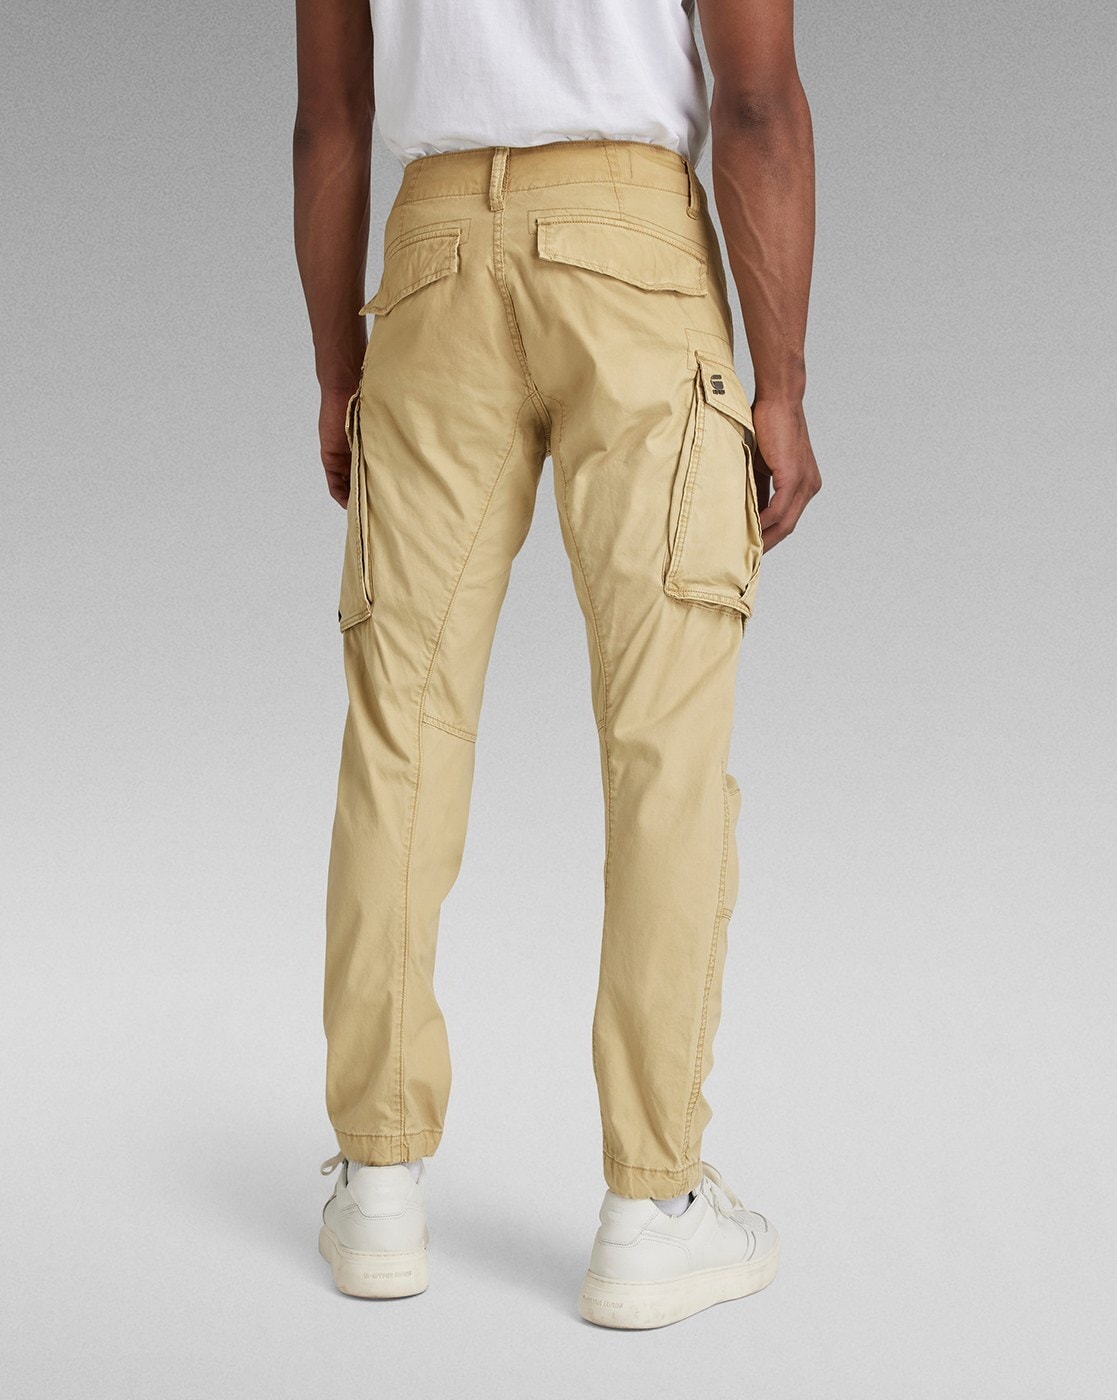 G-Star Raw Men's Rovic Zip Regular Tapered Cargo Pants Blue $190 New | eBay